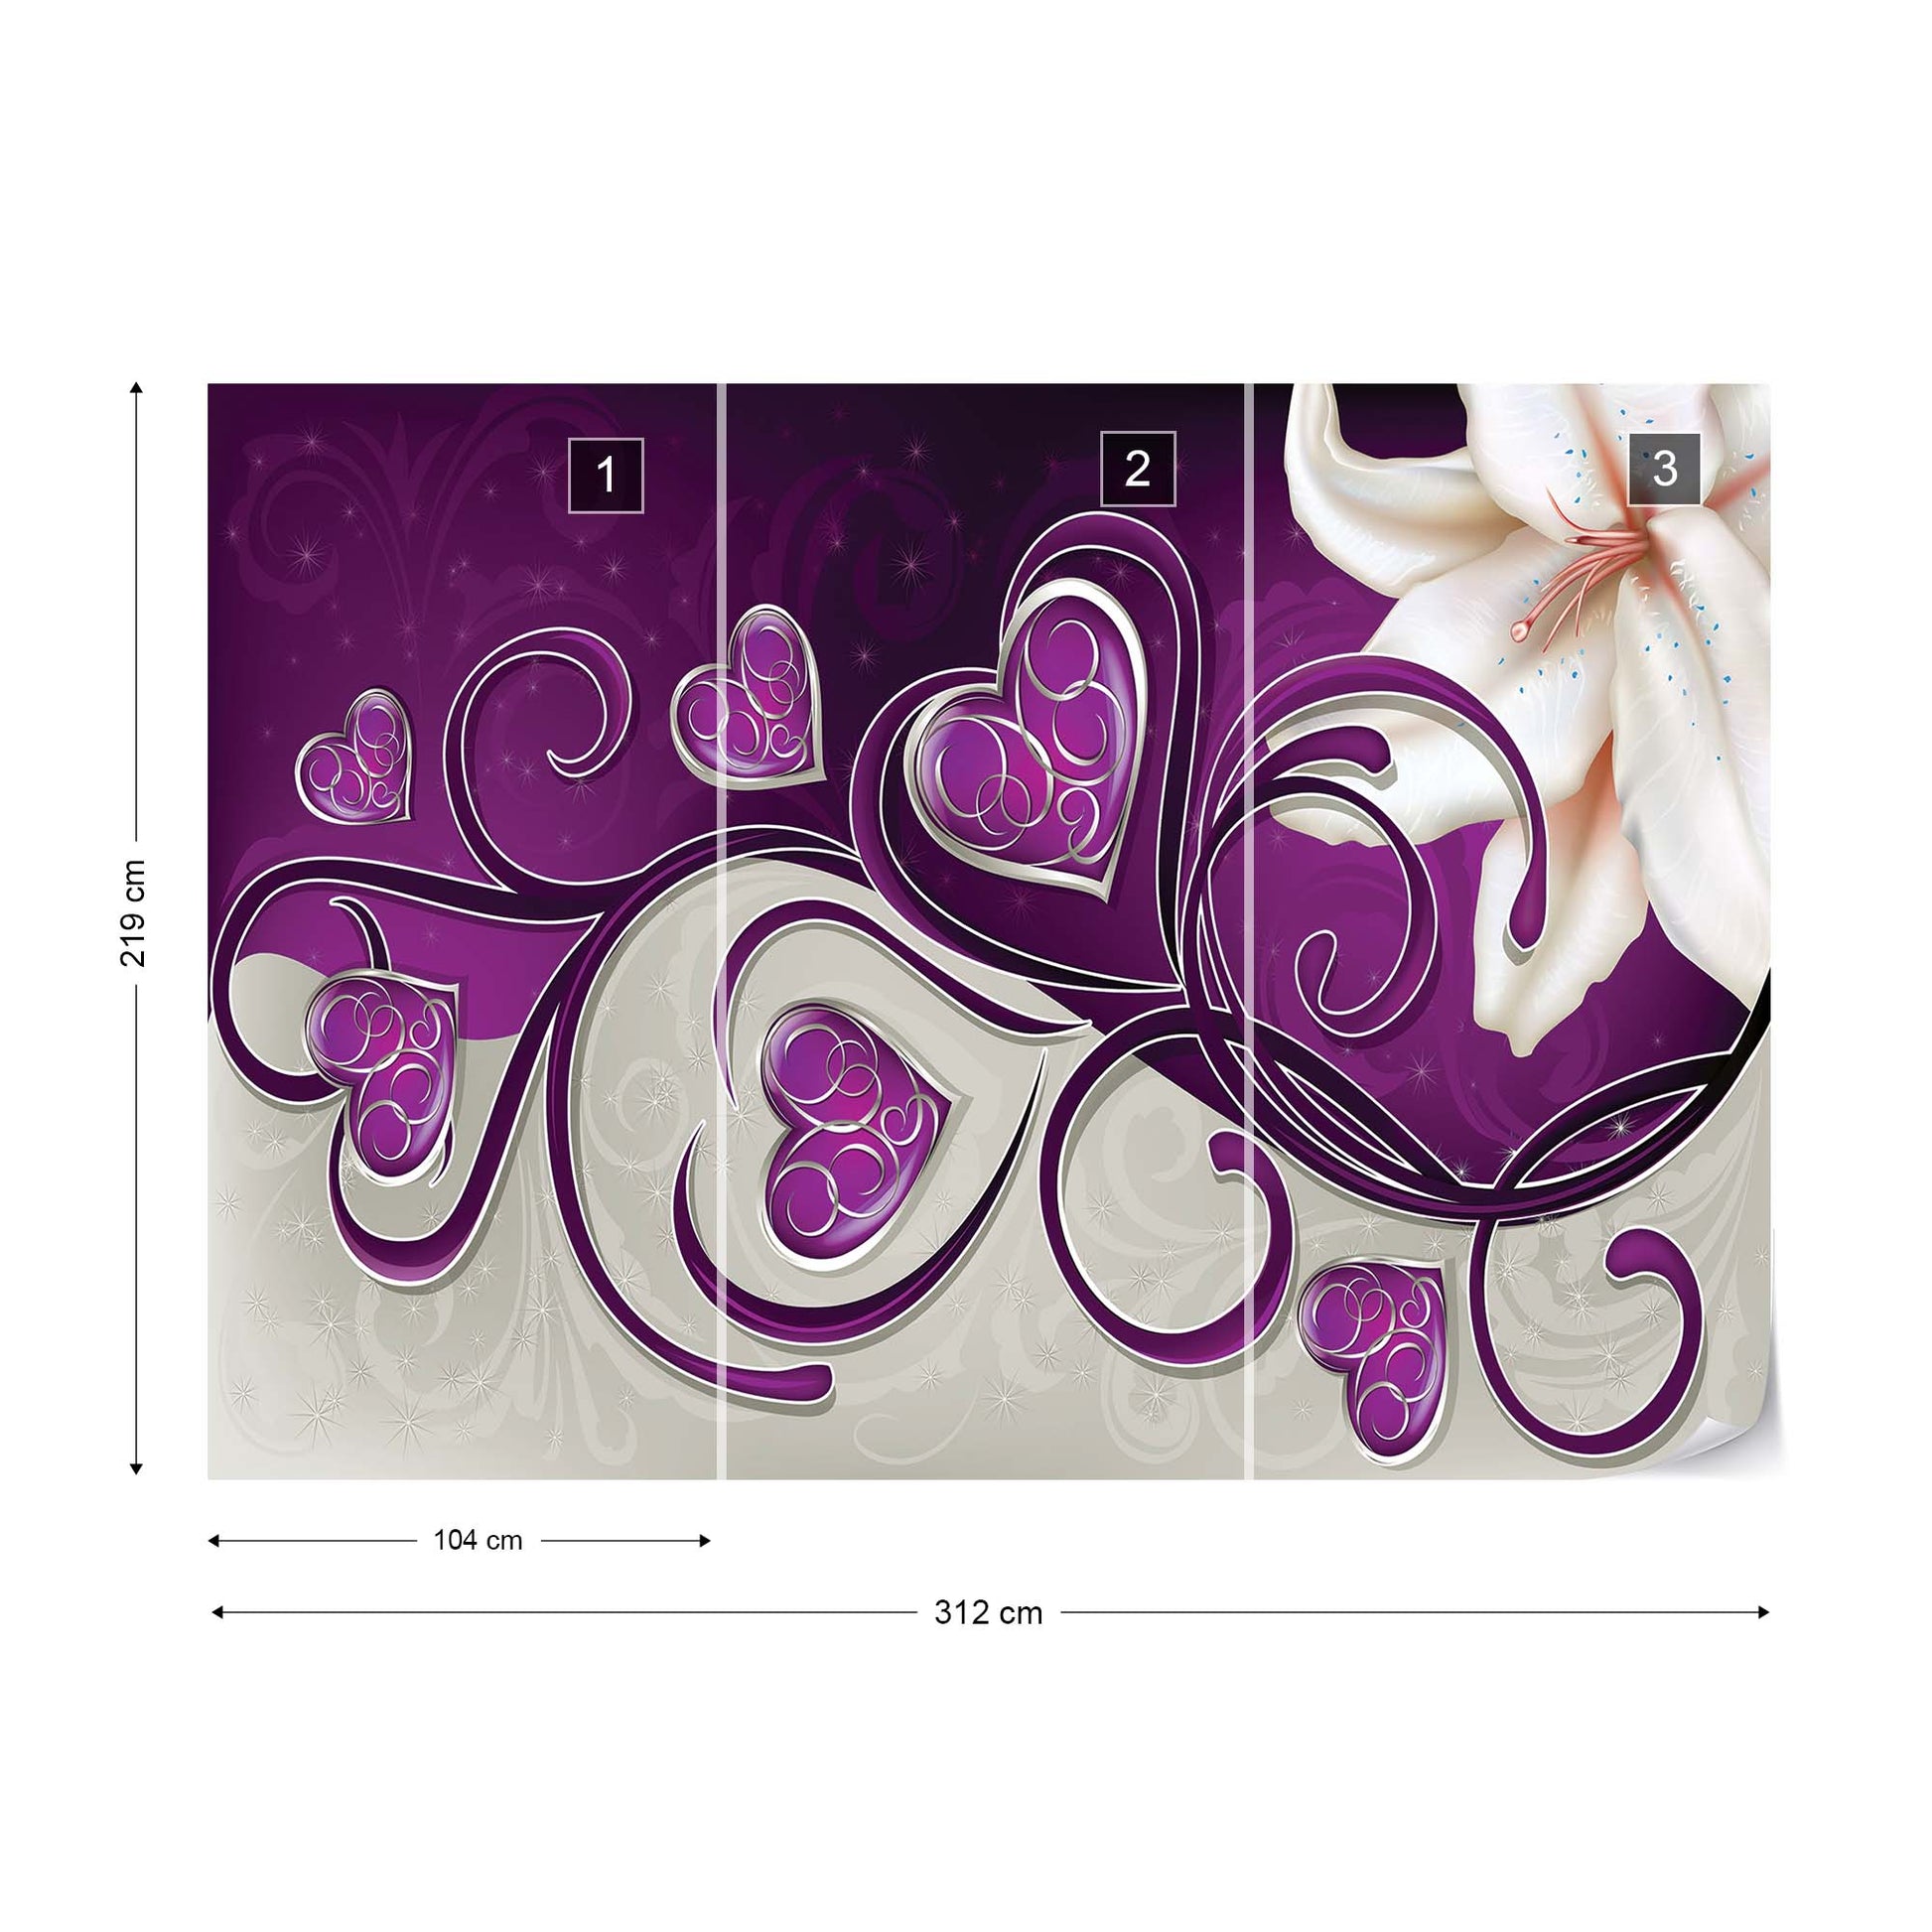 Lily Hearts Purple Swirls Photo Wallpaper Wall Mural - USTAD HOME